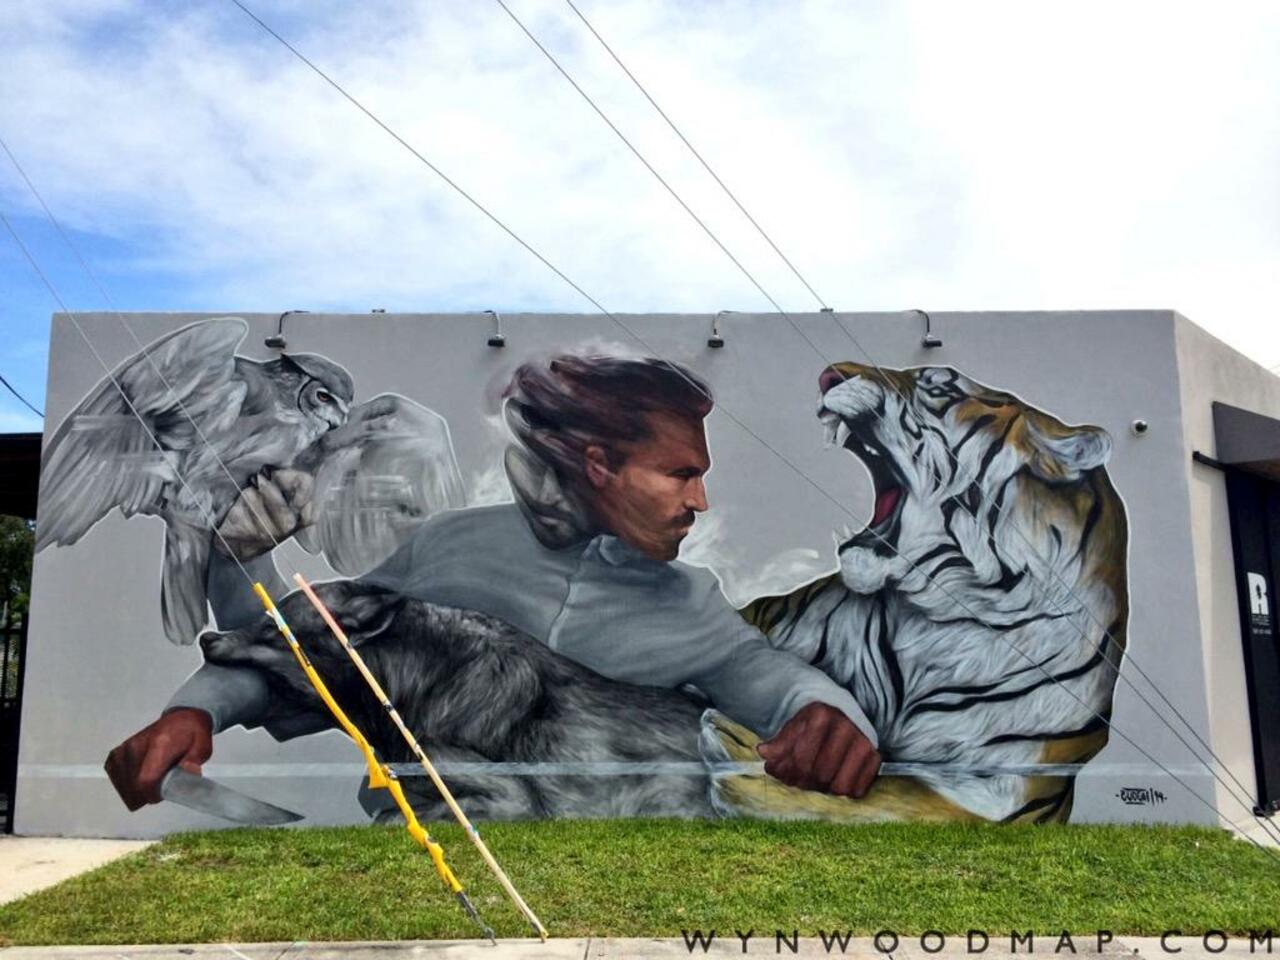 Evoca
#streetart #art #mural #graffiti http://t.co/BxeYkaqdZL